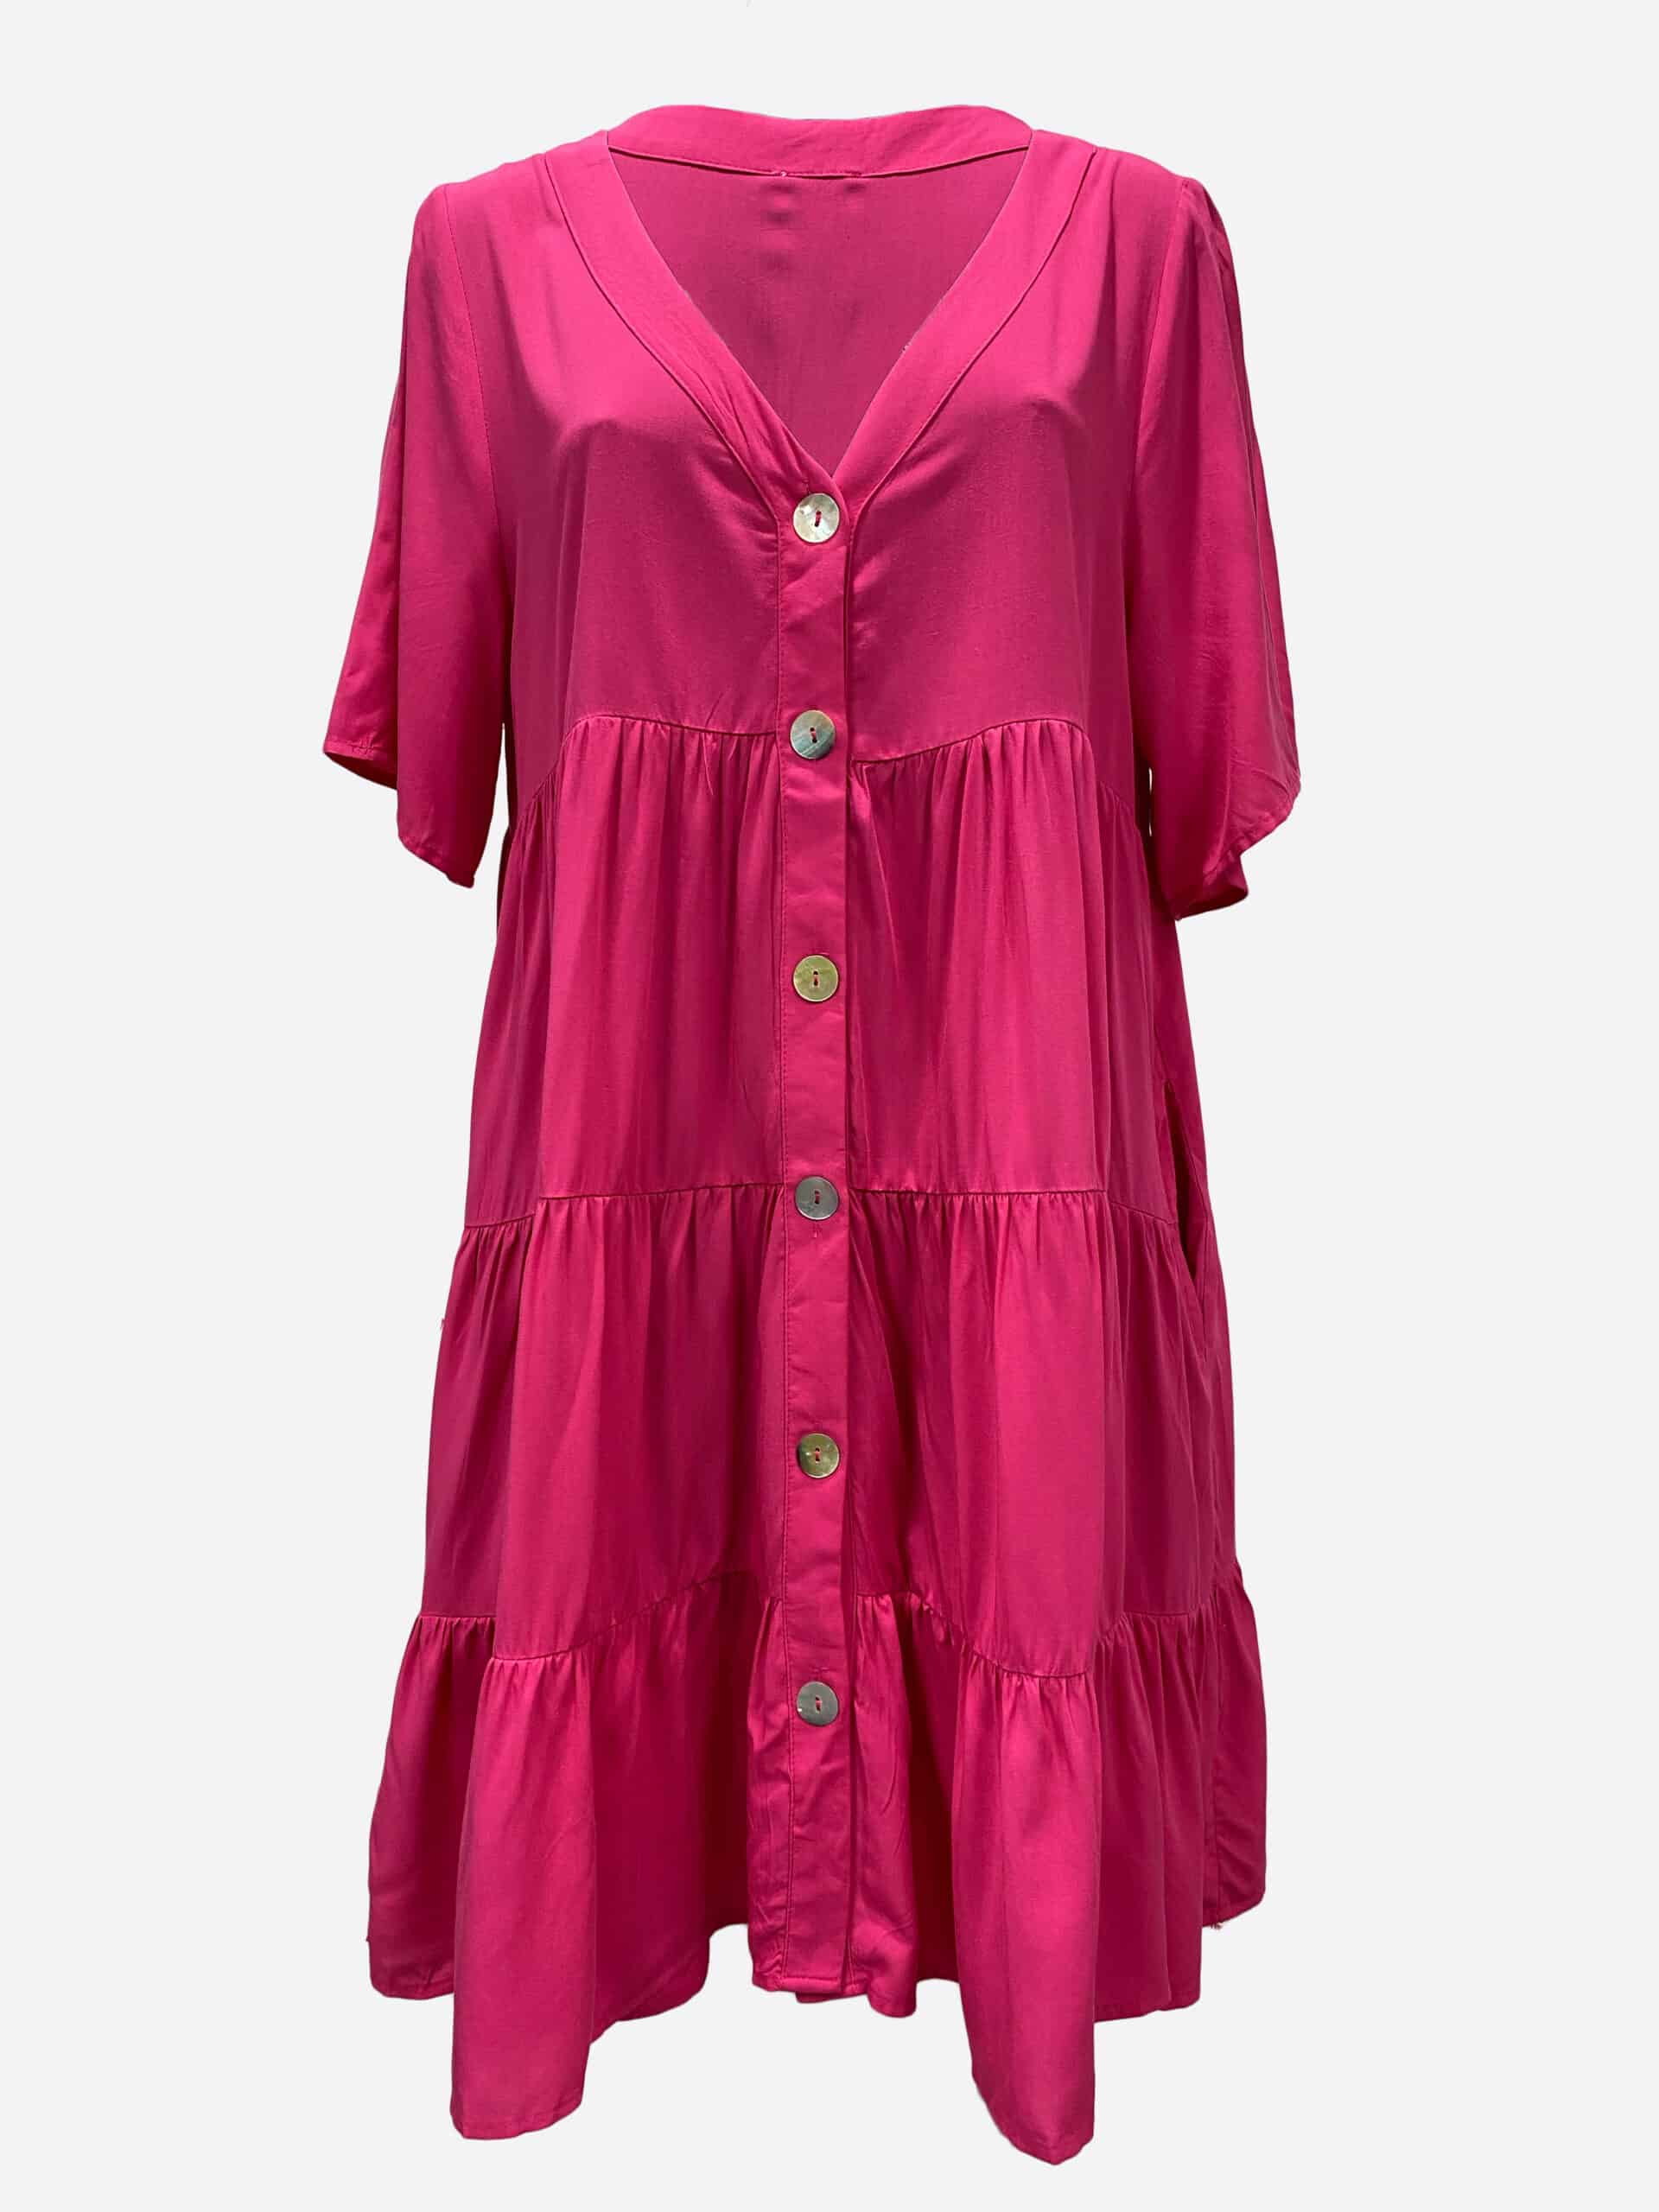 Dresses Florence Store - Women's Clothing Australia